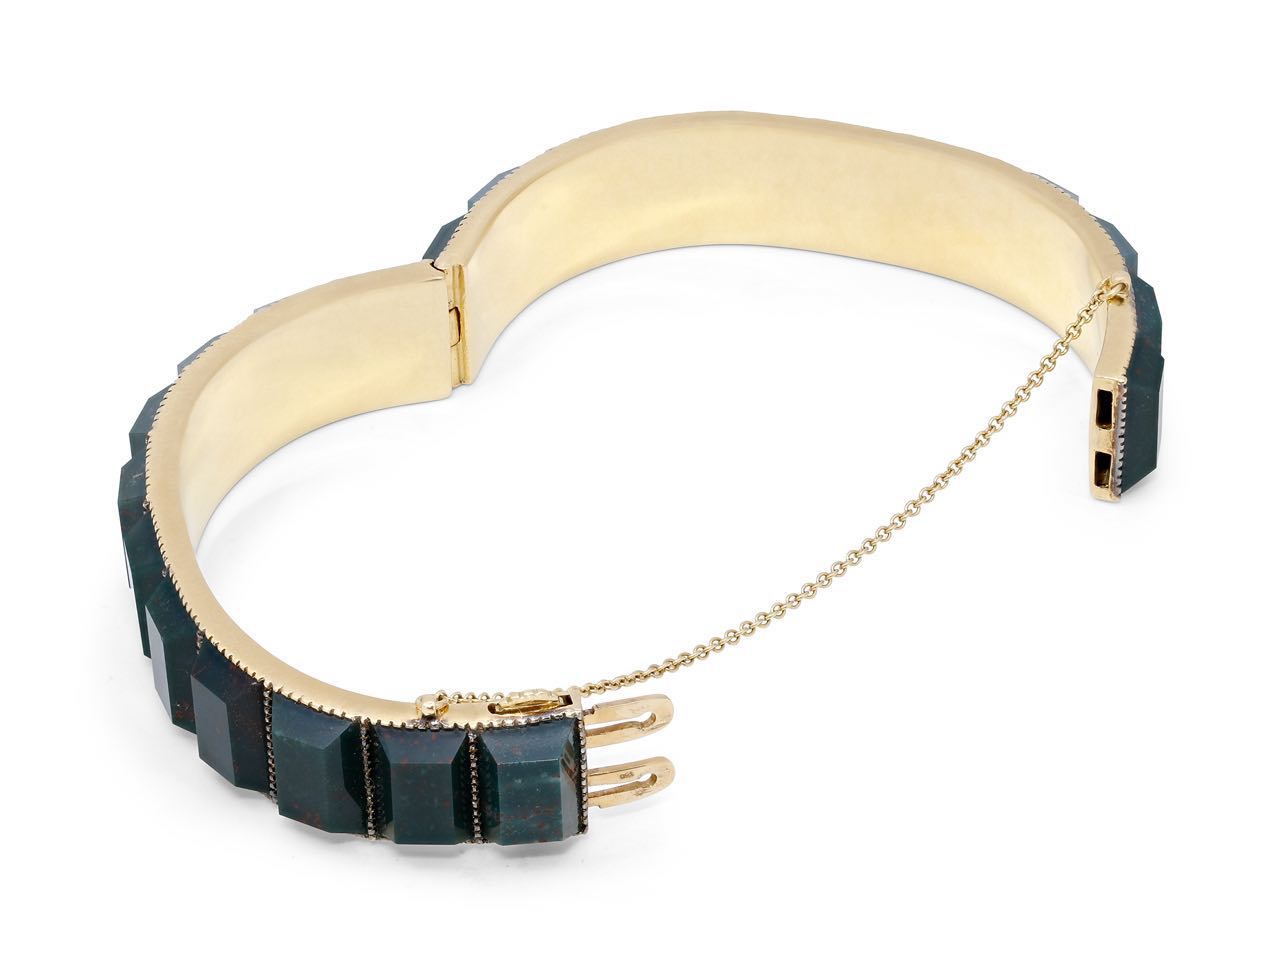 Bloodstone Bangle Bracelet in 18K Gold, by Sylva & Cie